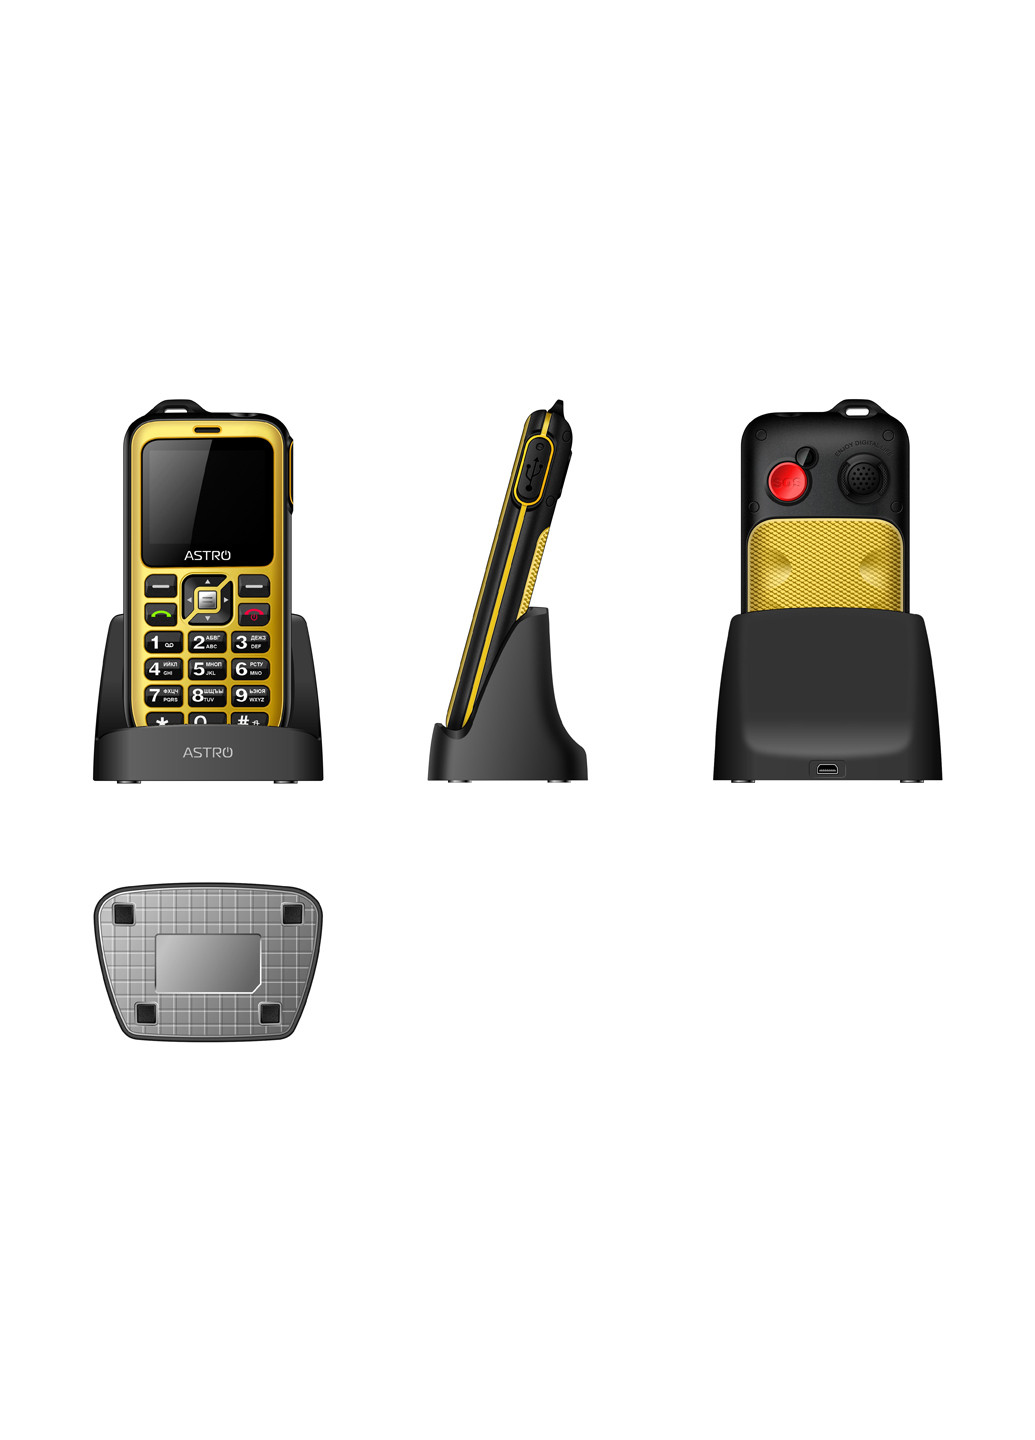 Мобильный телефон B200 RX Yellow Astro astro b200 rx yellow (131851169)